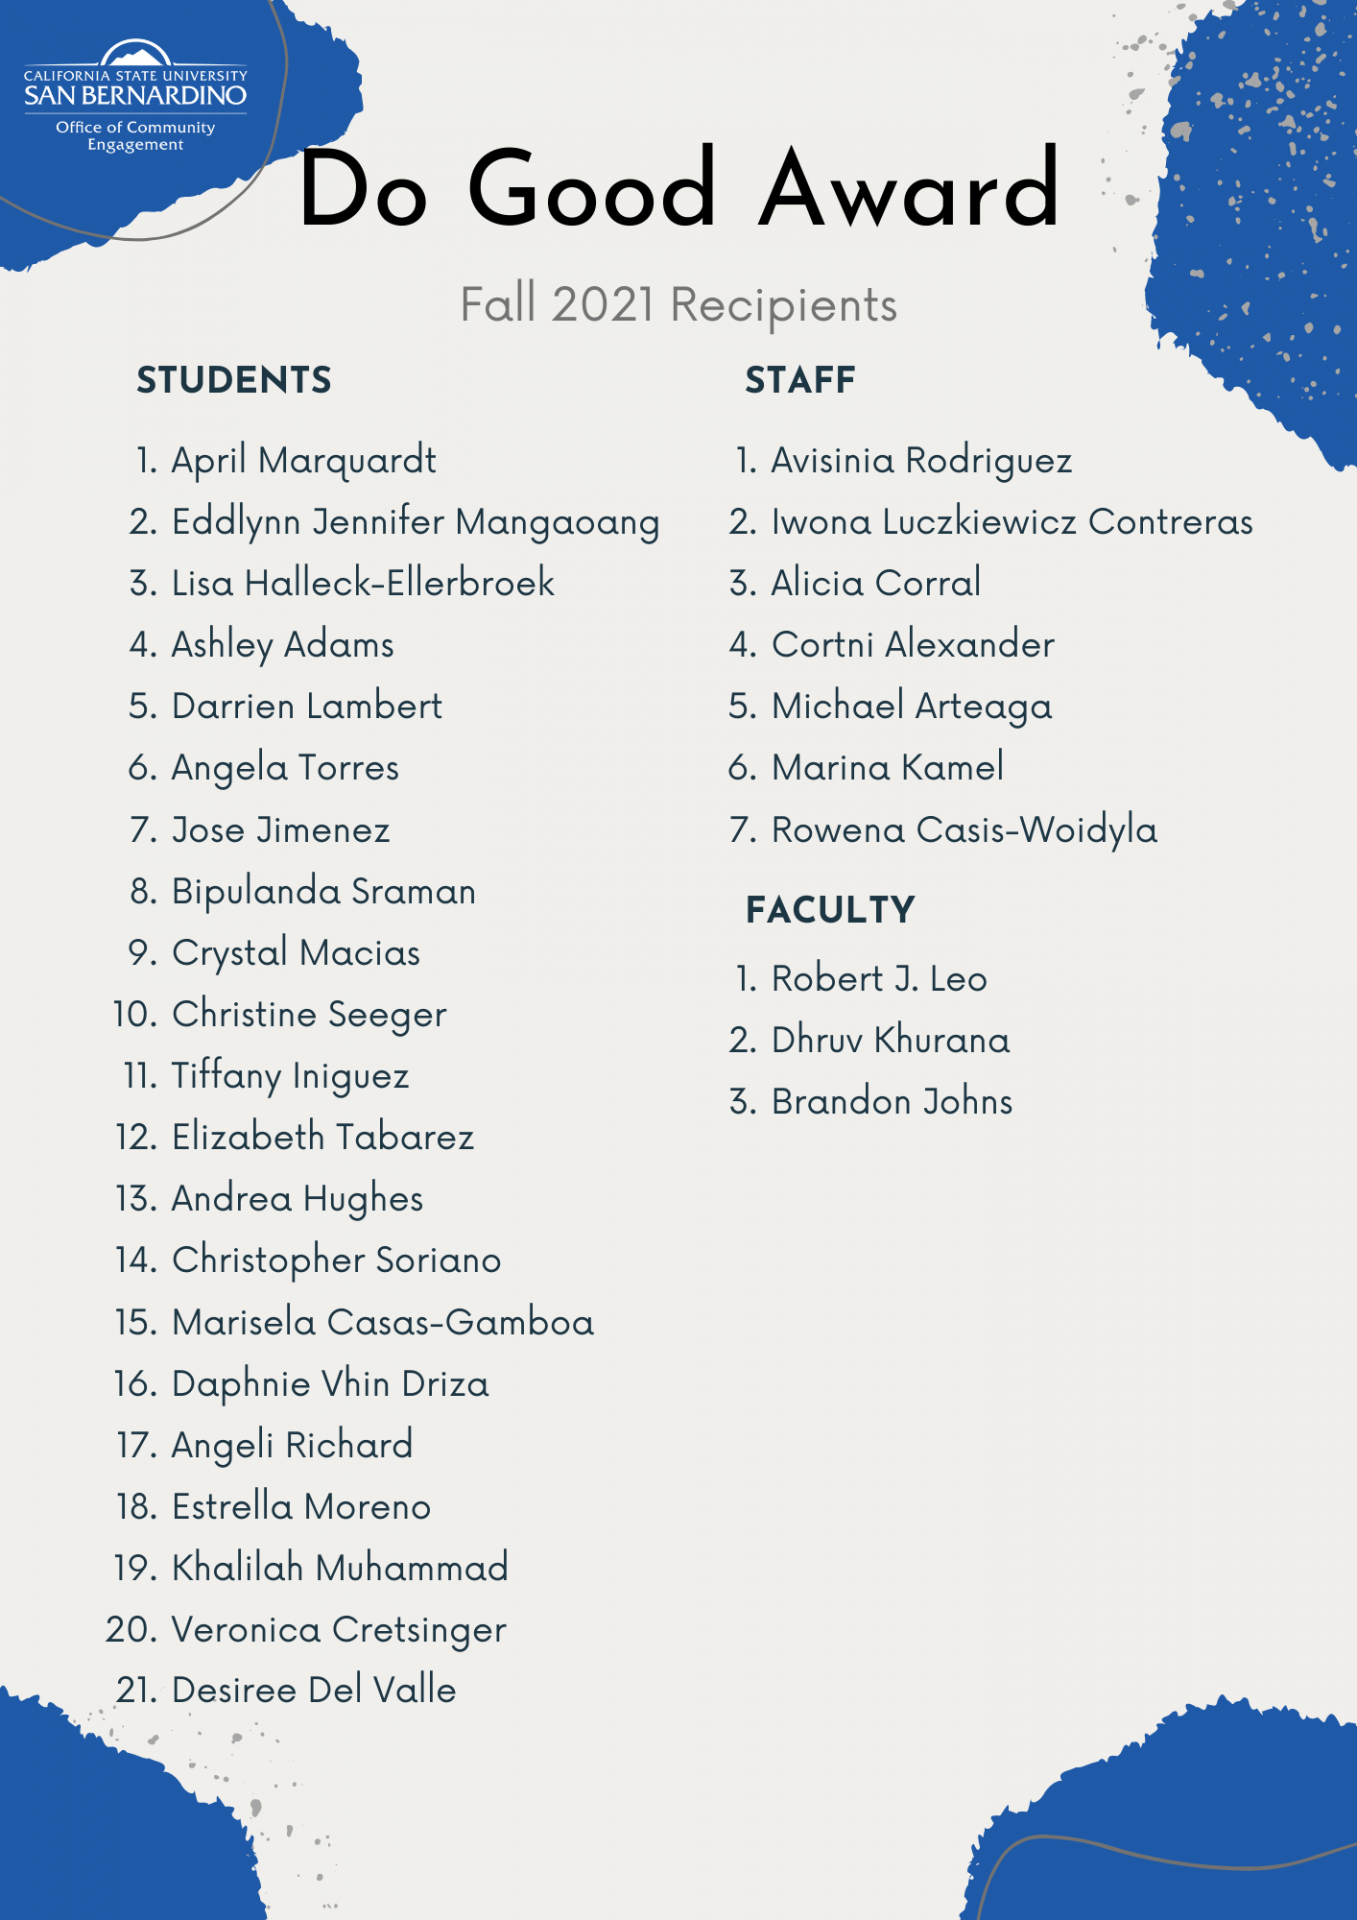 Fall 2021 Do Good Award Recipients List 